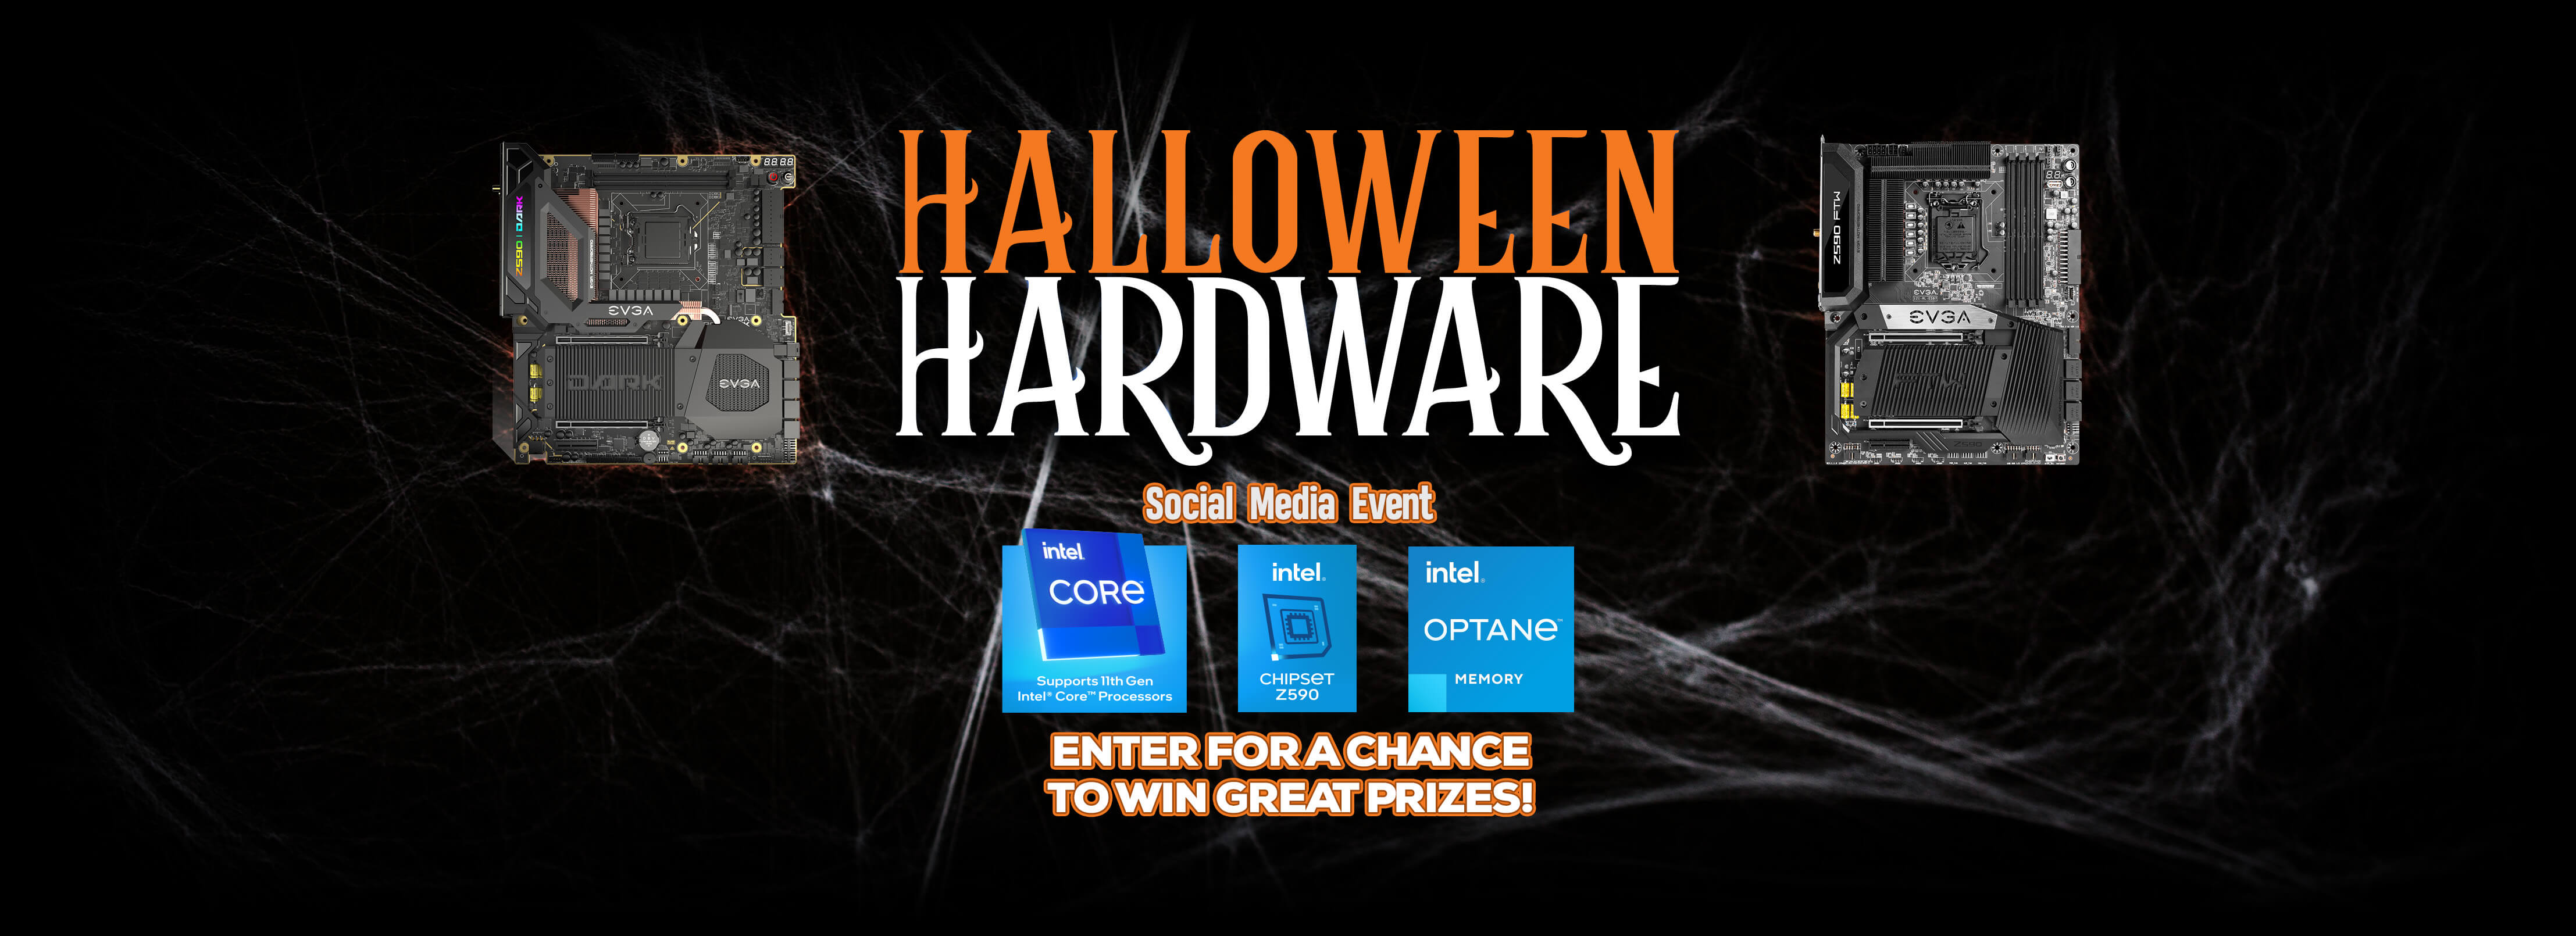 Halloween Hardware Social Media Event